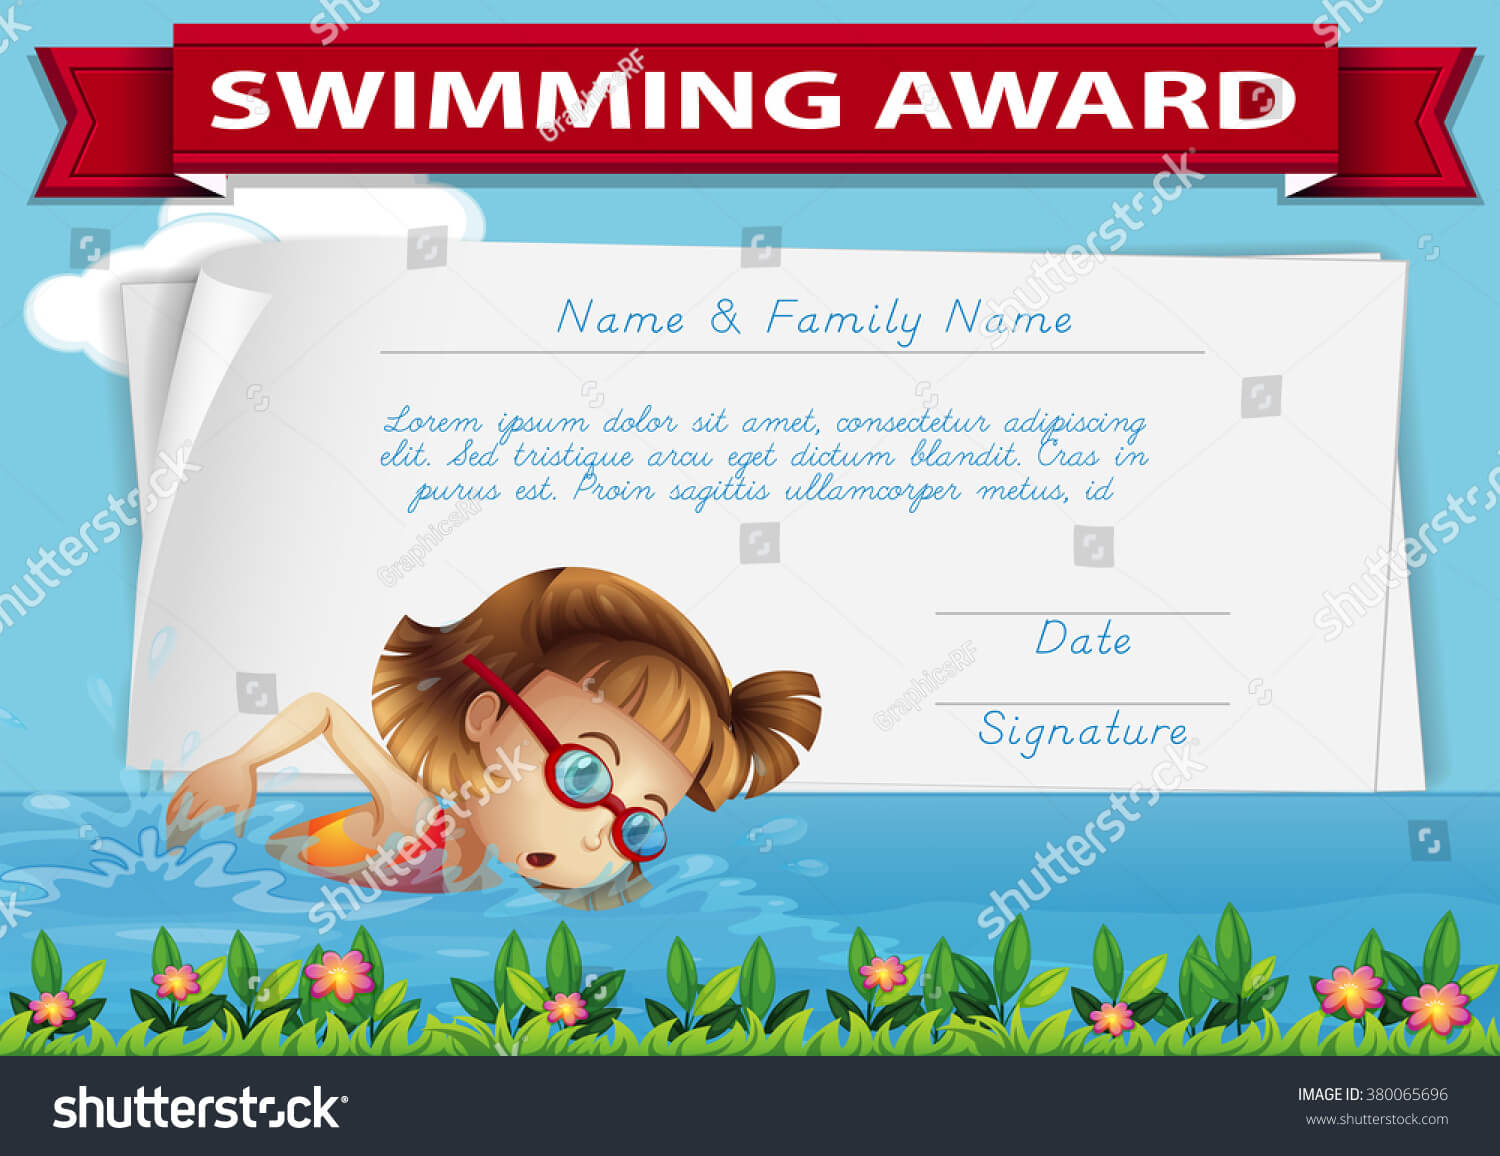 Swimming Award Certificate Template Illustration Stock Throughout Swimming Award Certificate Template